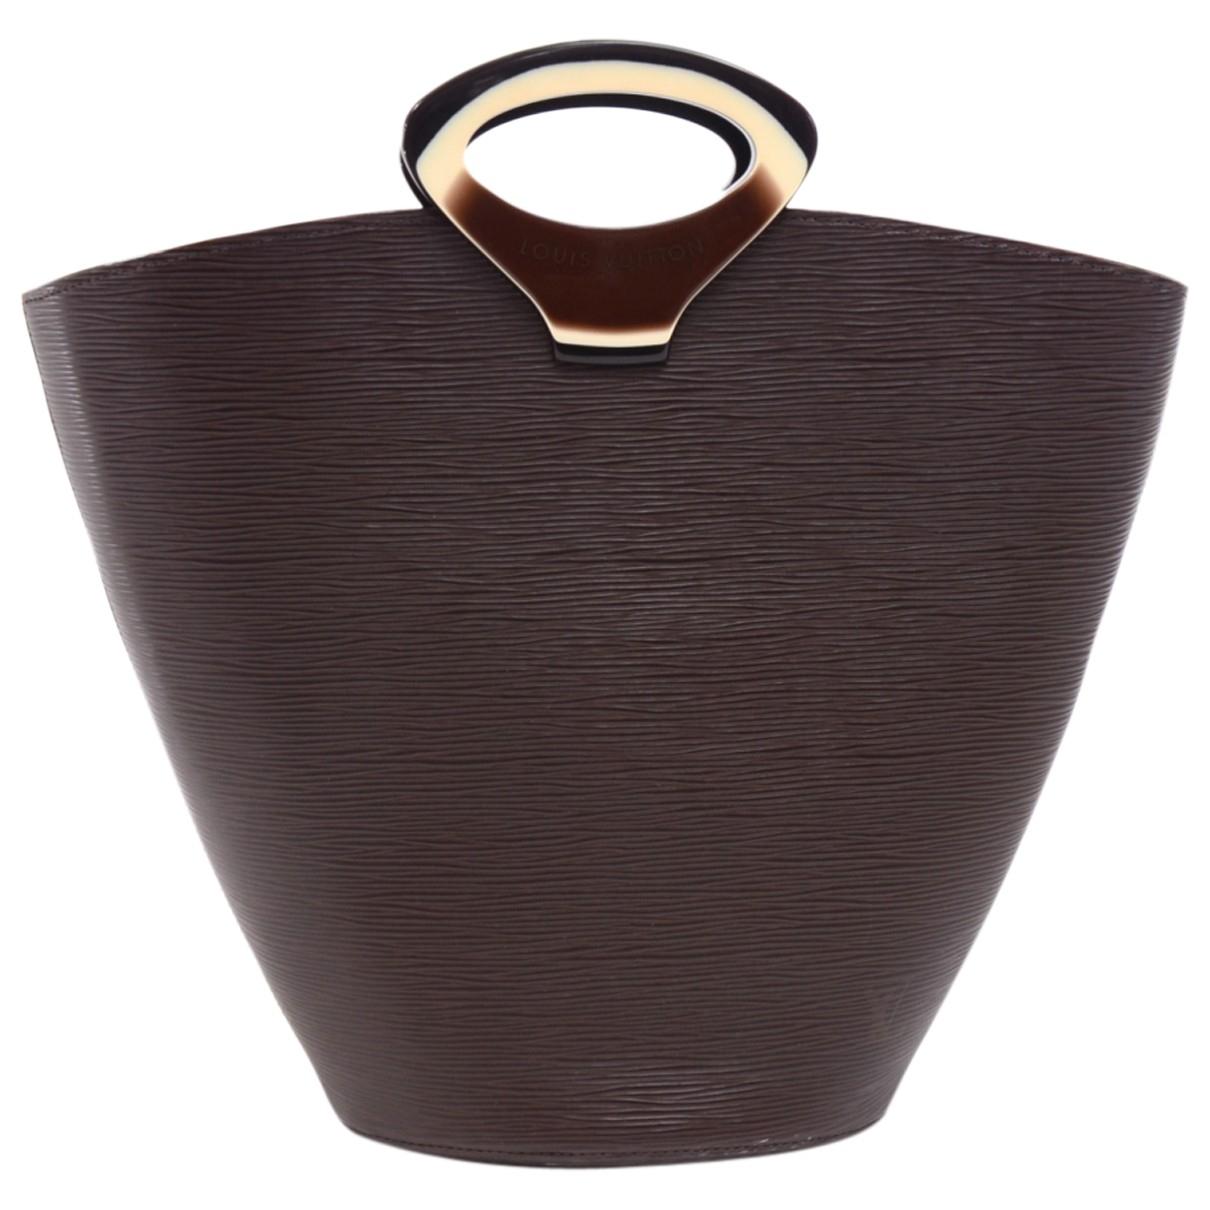 Lyst - Louis Vuitton Leather Handbag in Brown